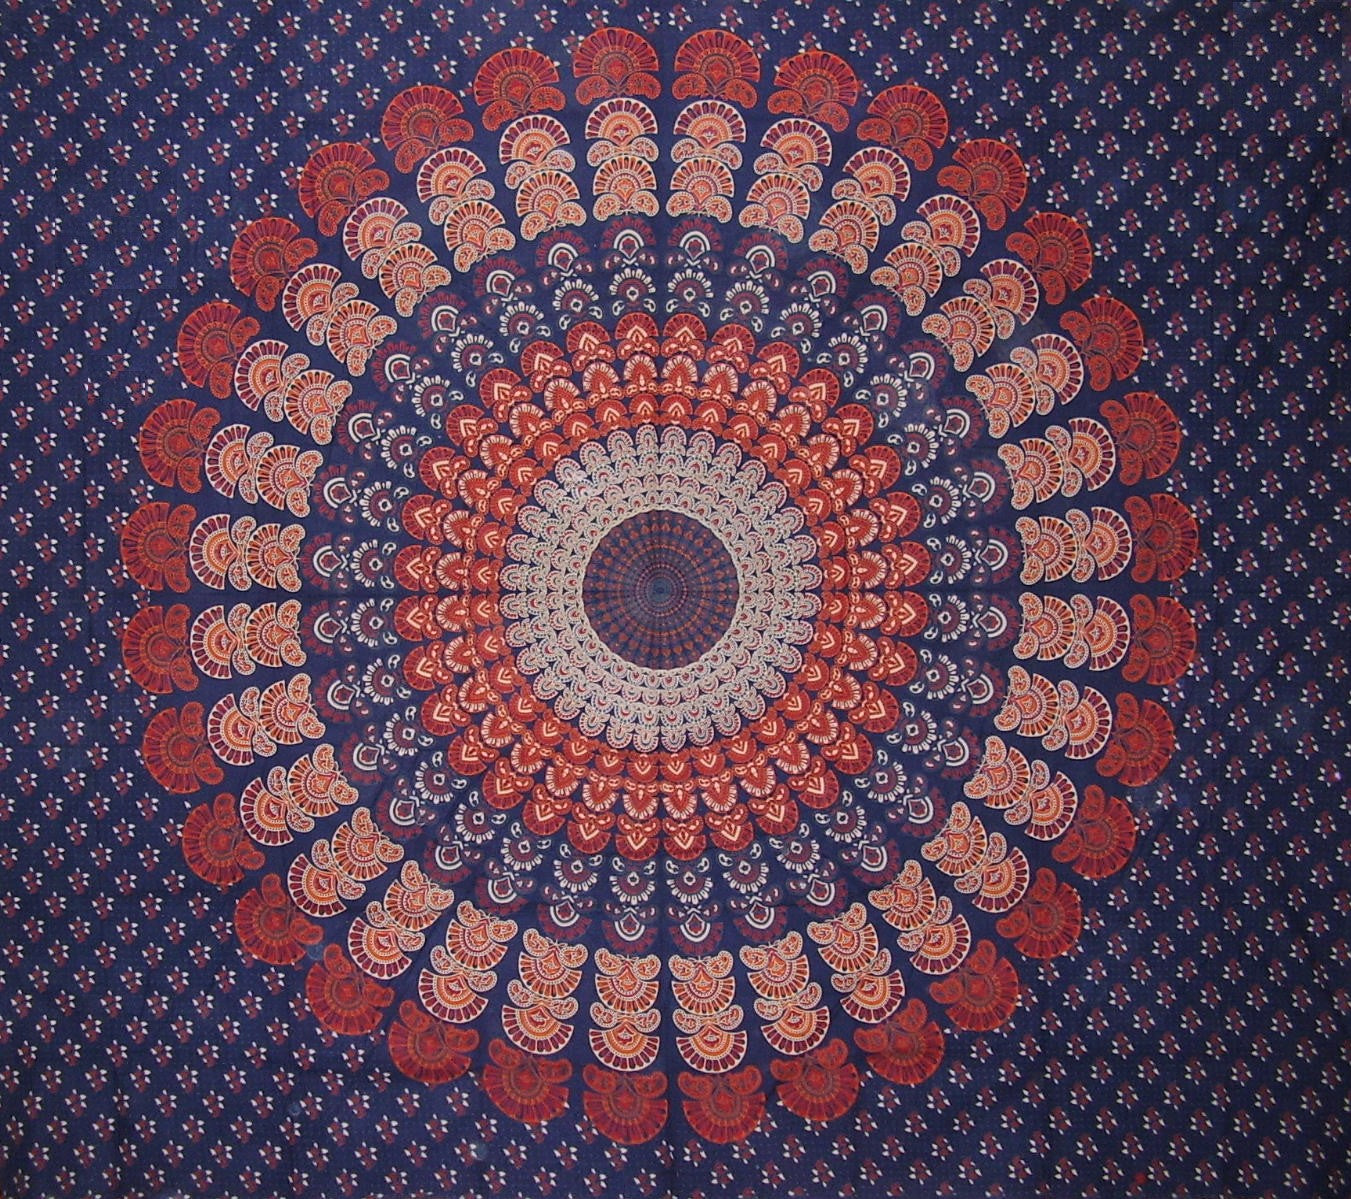 Sanganeer Mandala Print Tapestry Cotton Bedspread 92" x 82" Full Blue